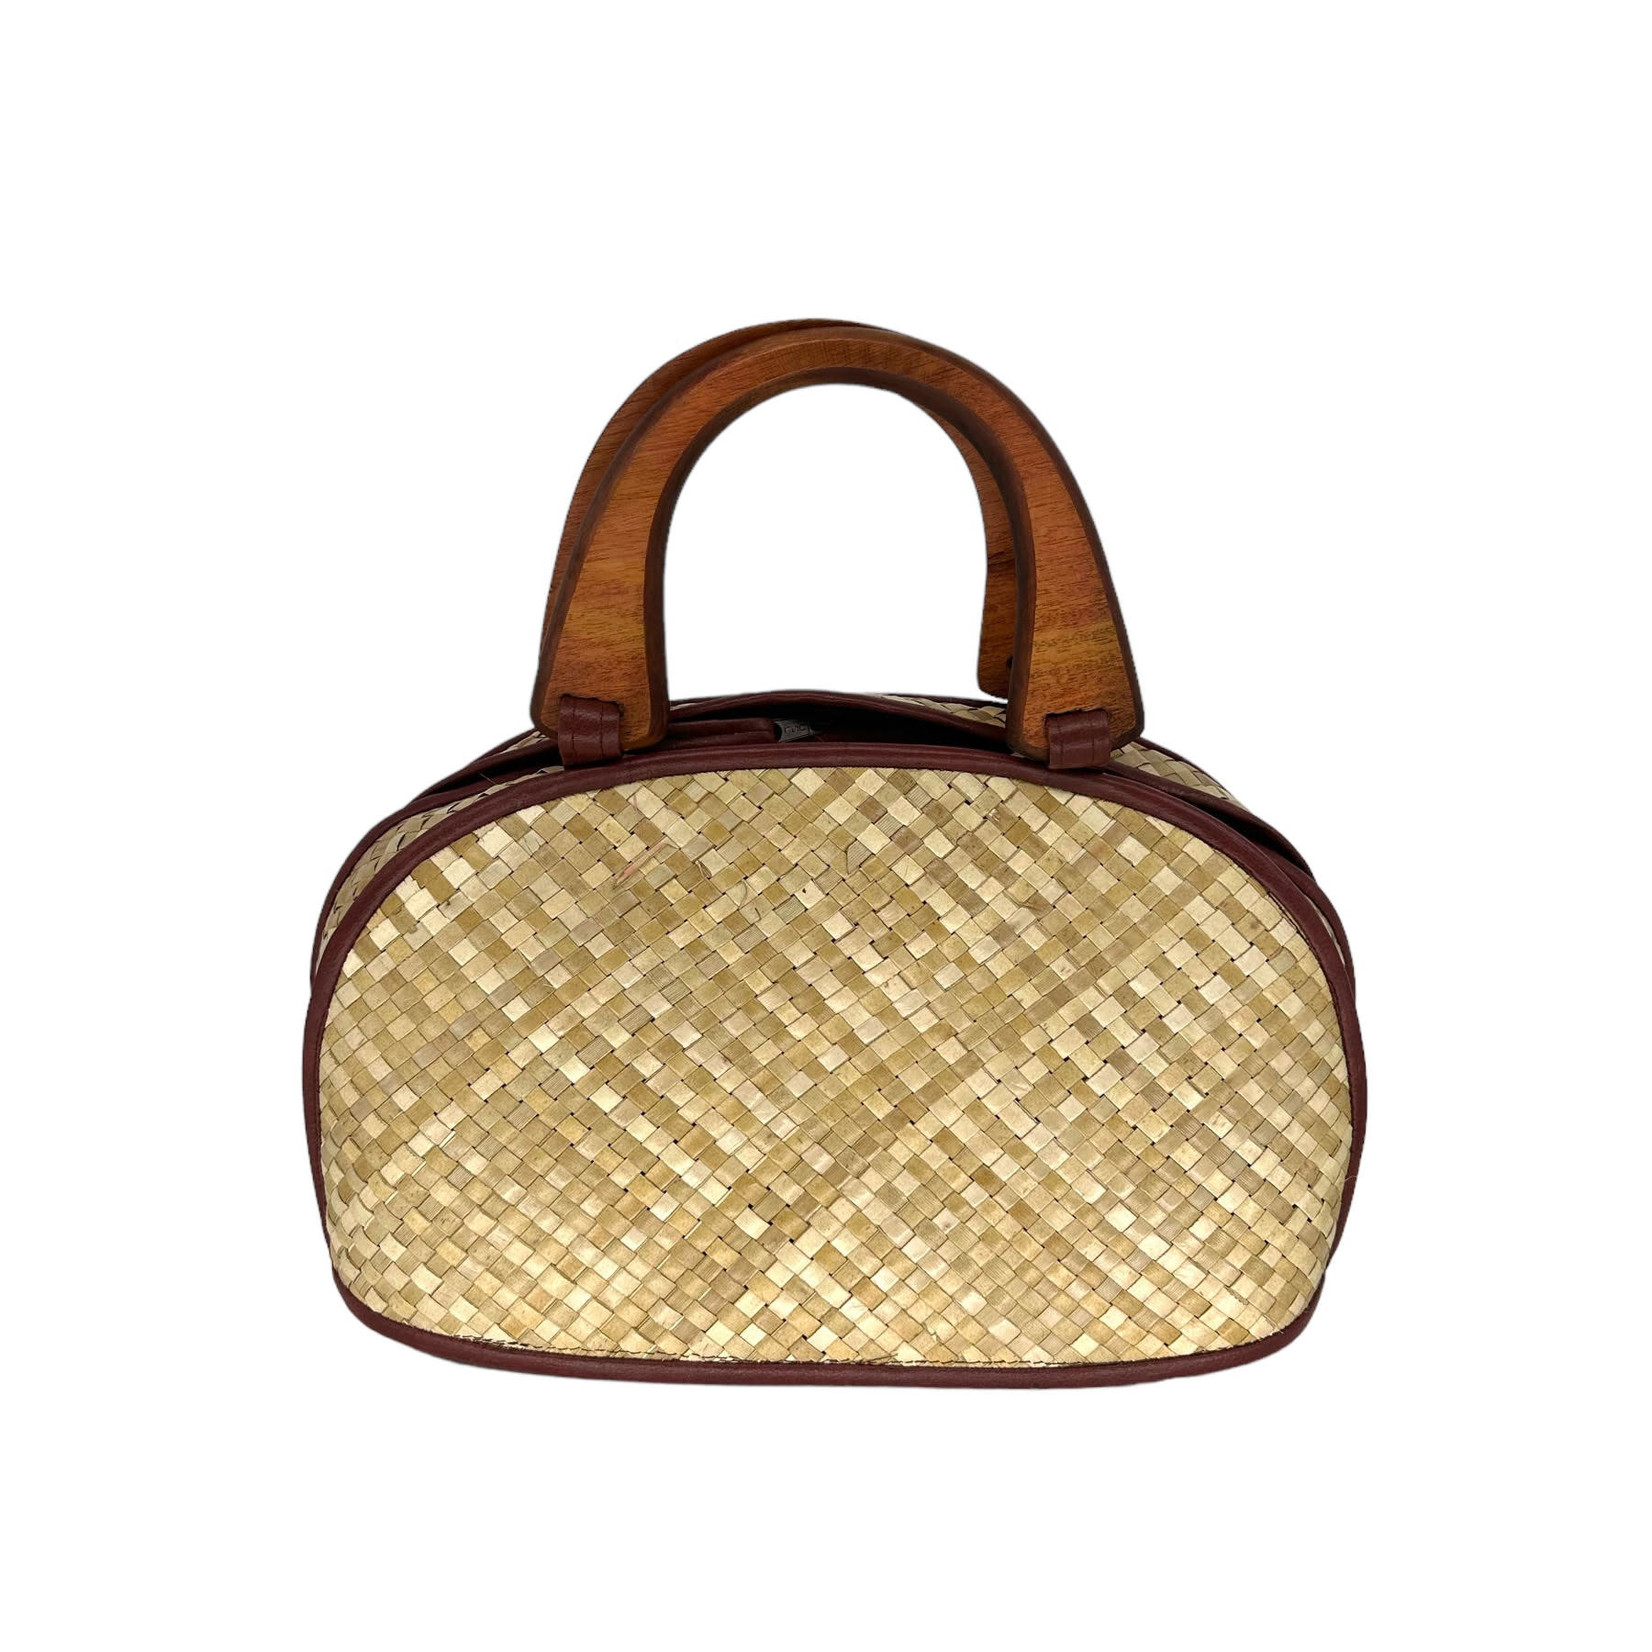 Woven Lauhala Bag with Wood Handles Hoawa